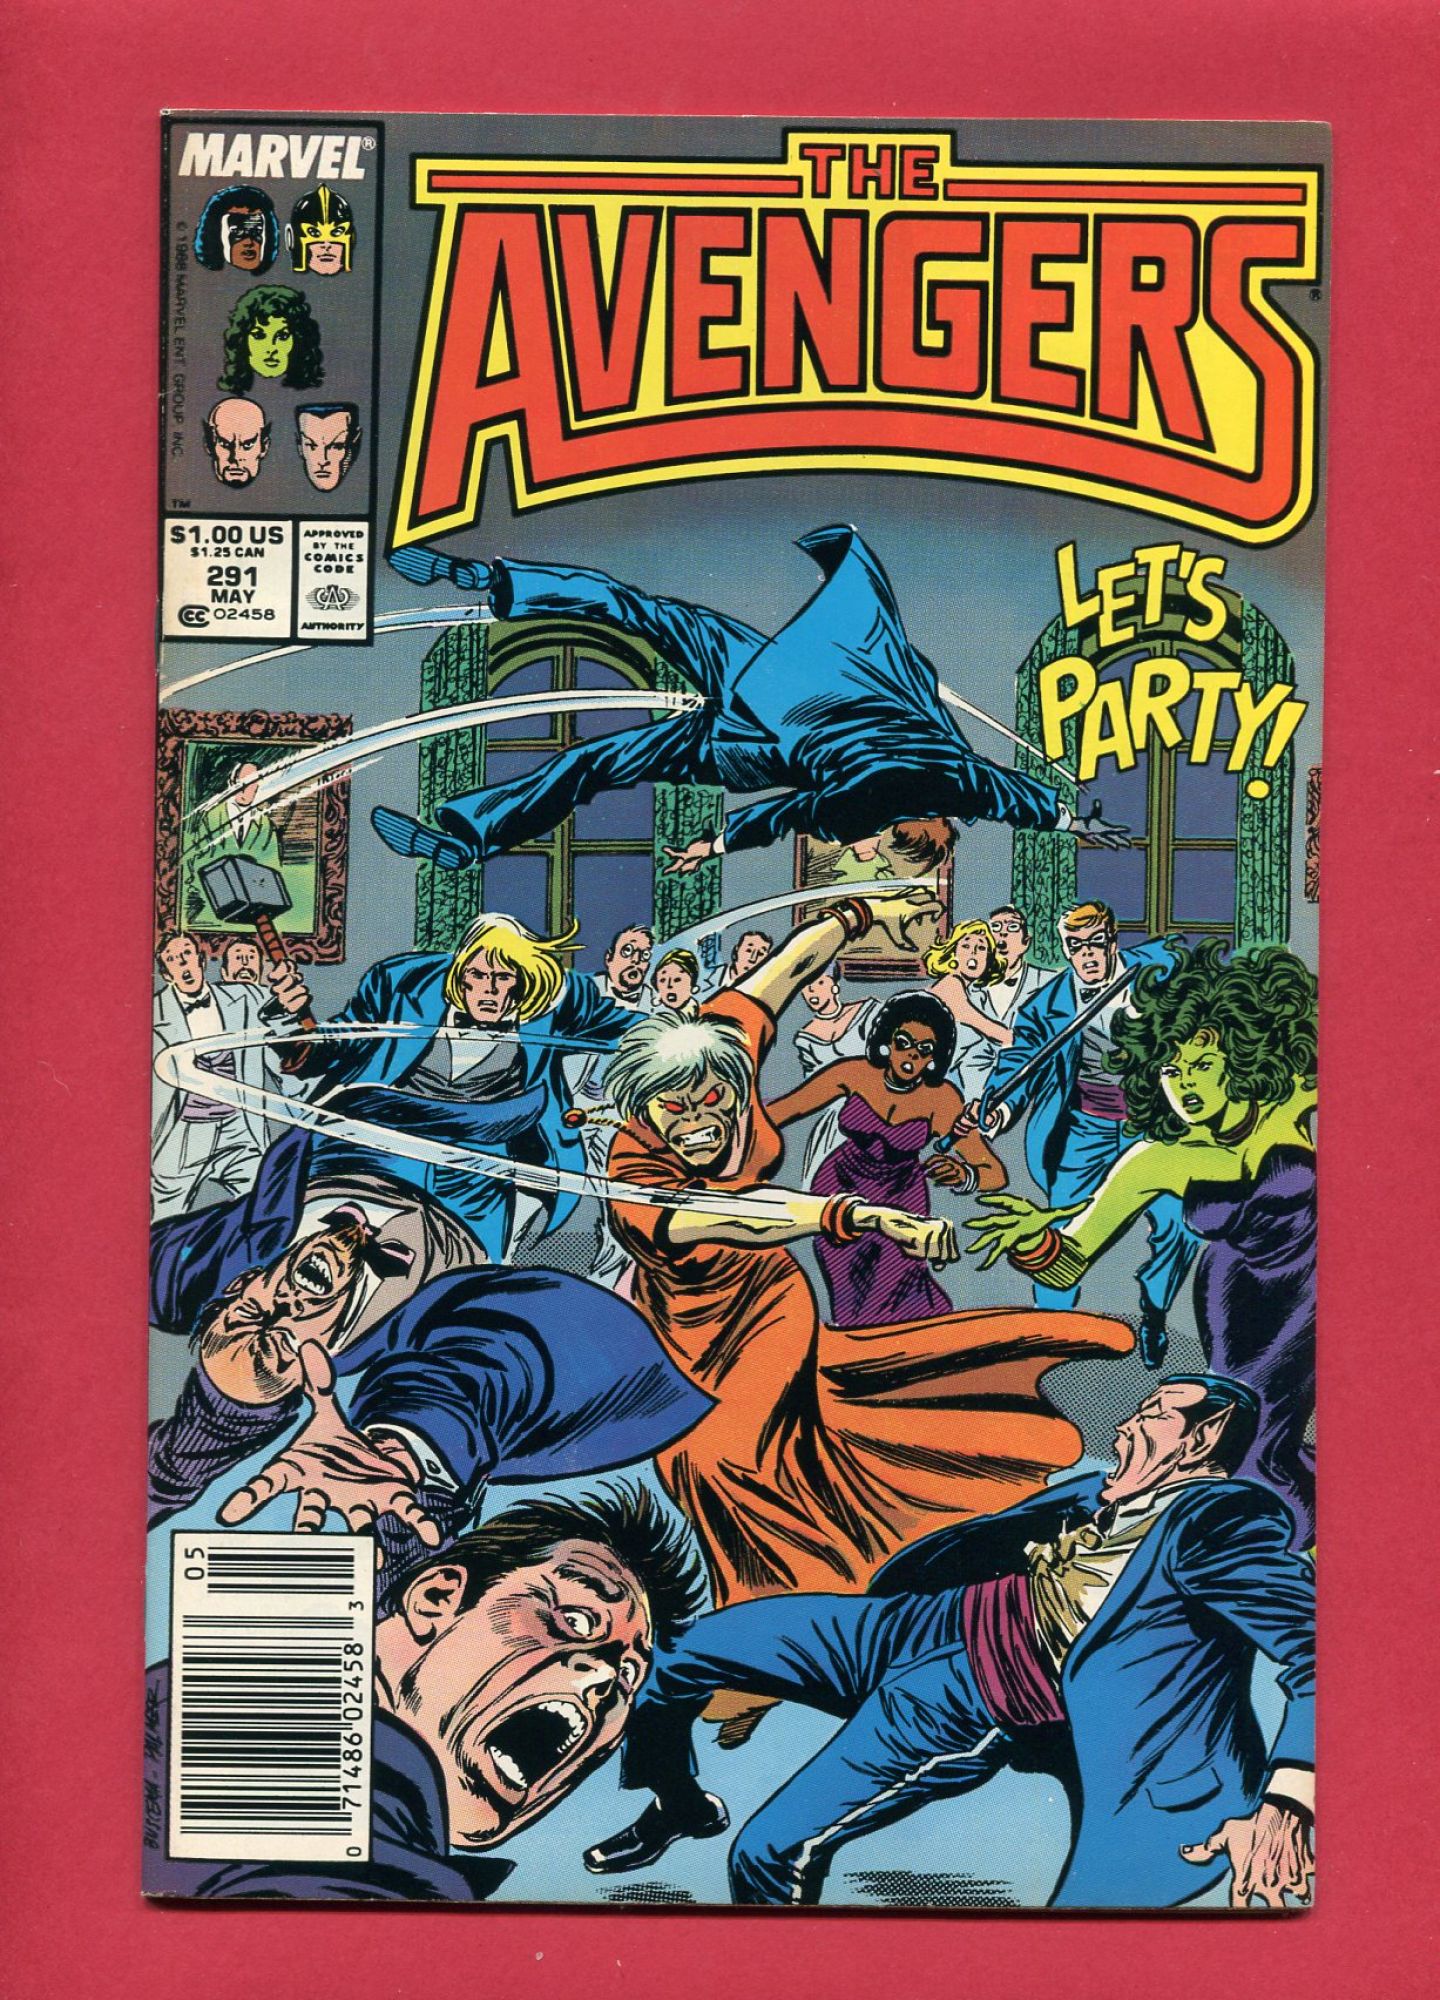 Avengers #291, May 1988, 8.0 VF